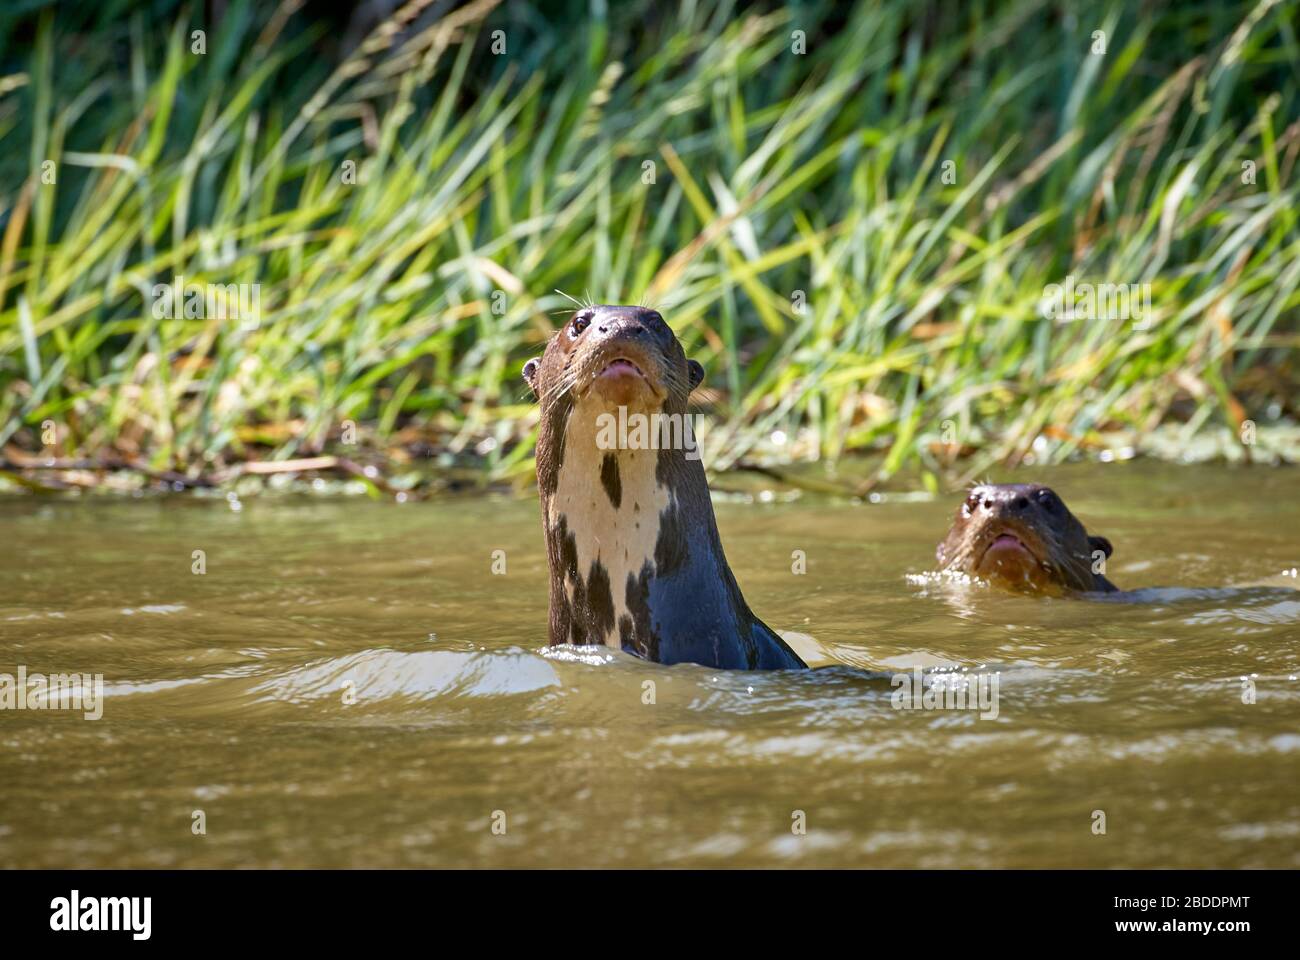 giant otter in water, Pteronura brasiliensis, LOS LLANOS, Venezuela, South America, America Stock Photo